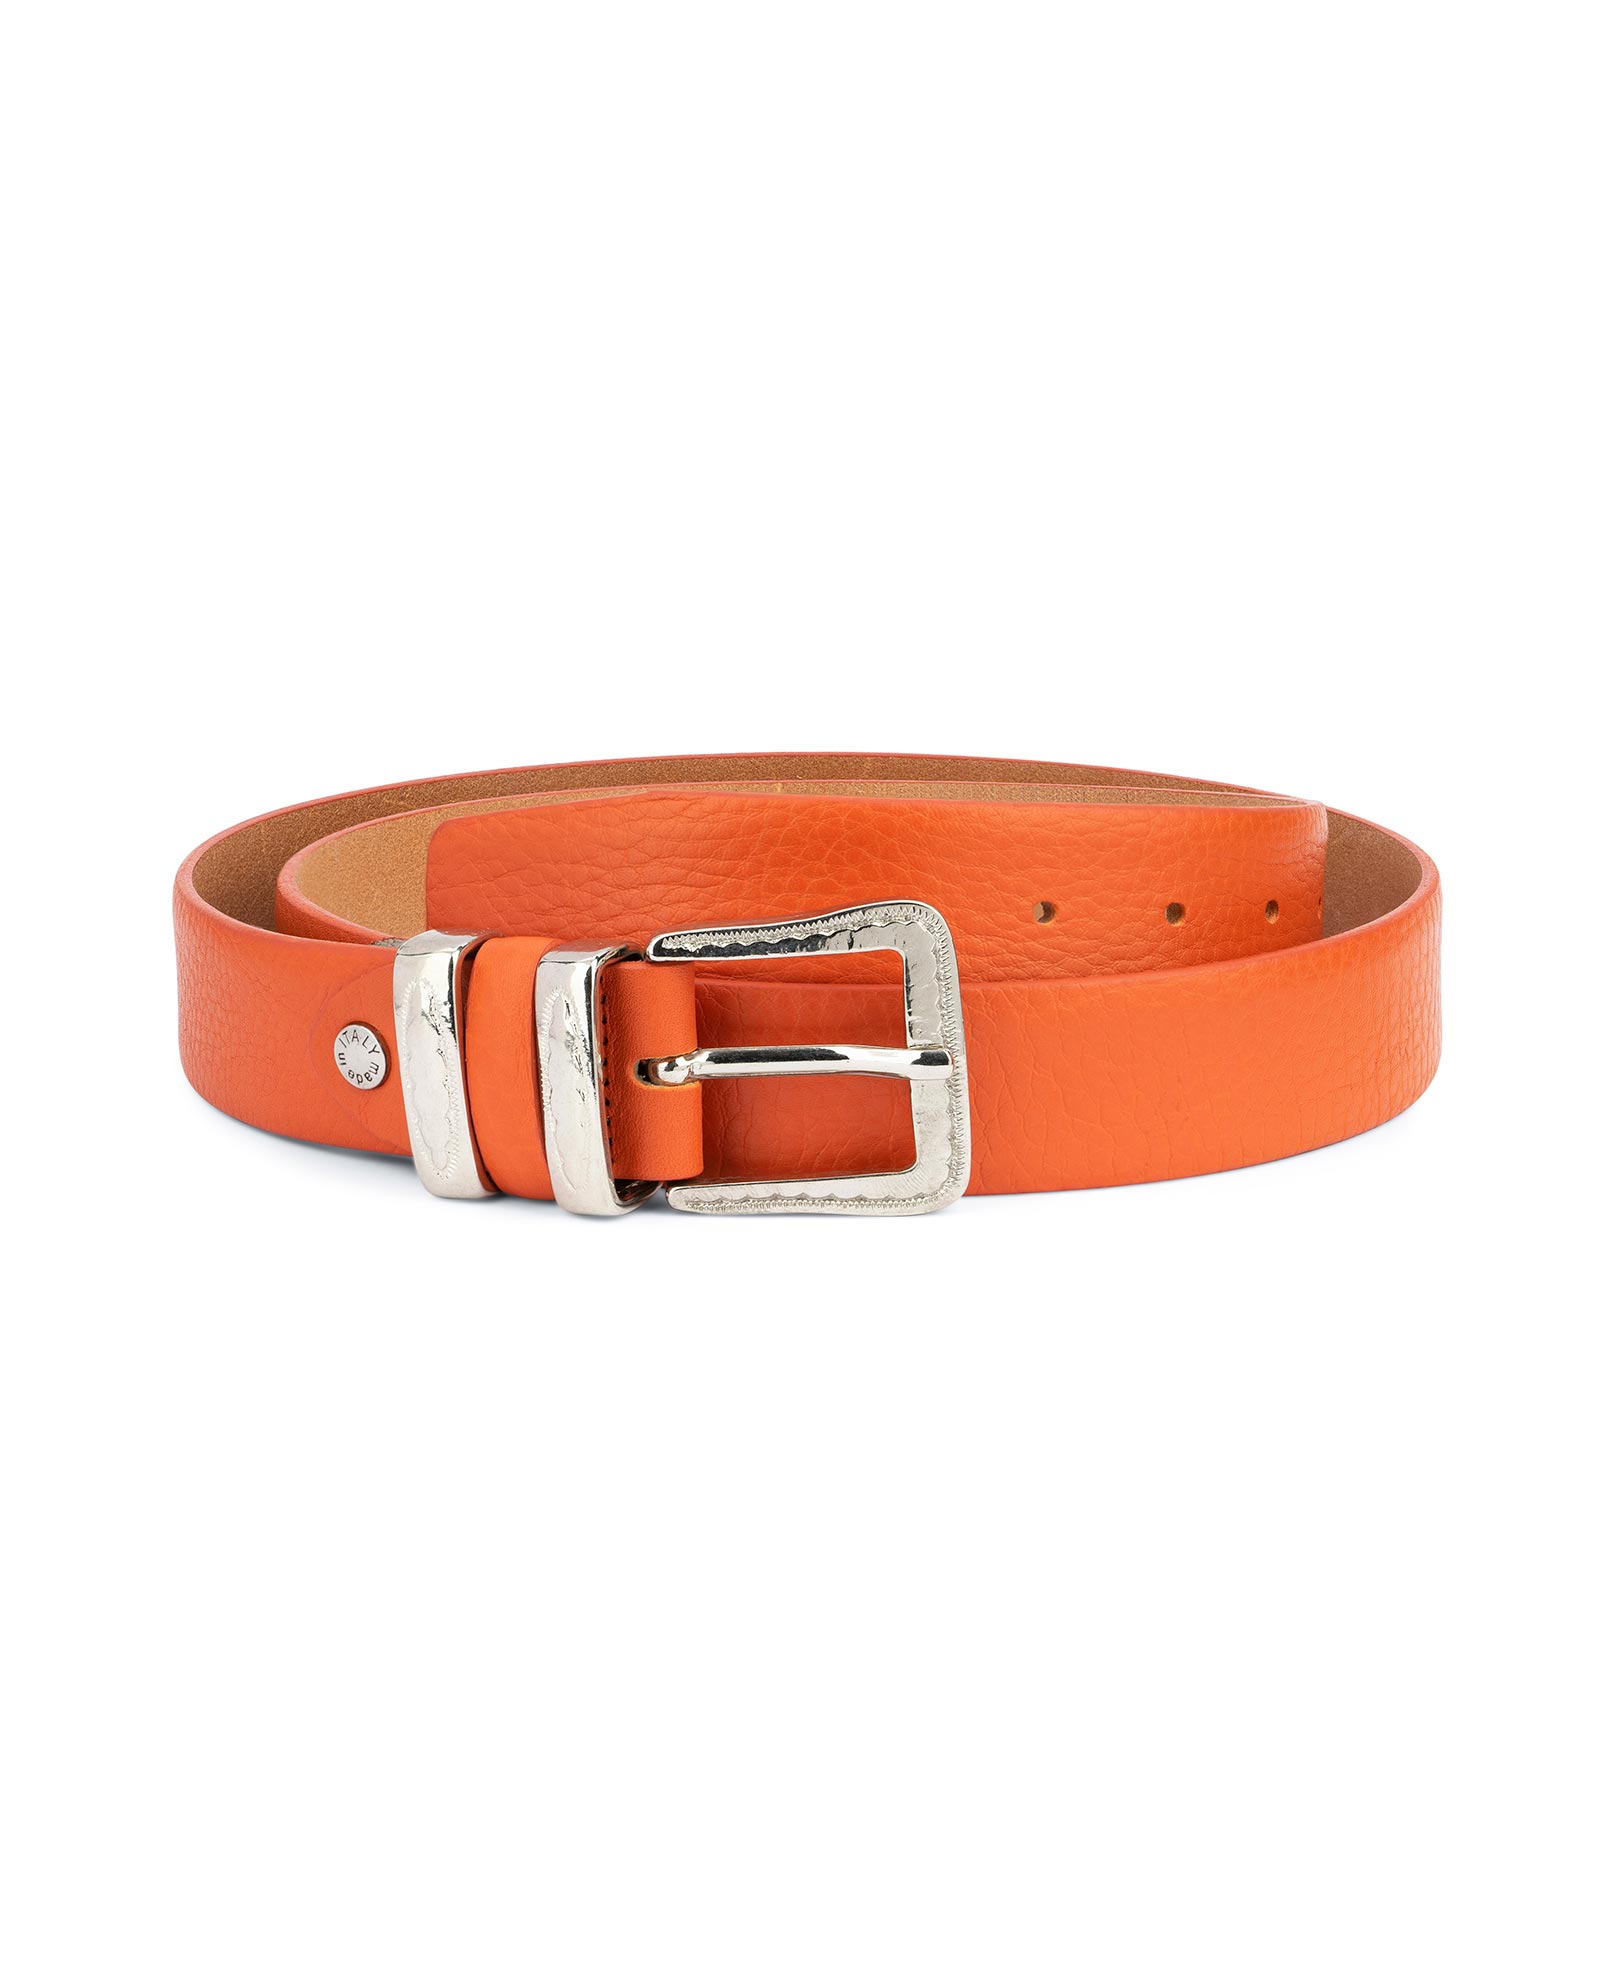 Buy Men's Orange Belt with Western Buckle | LeatherBeltsOnline.com